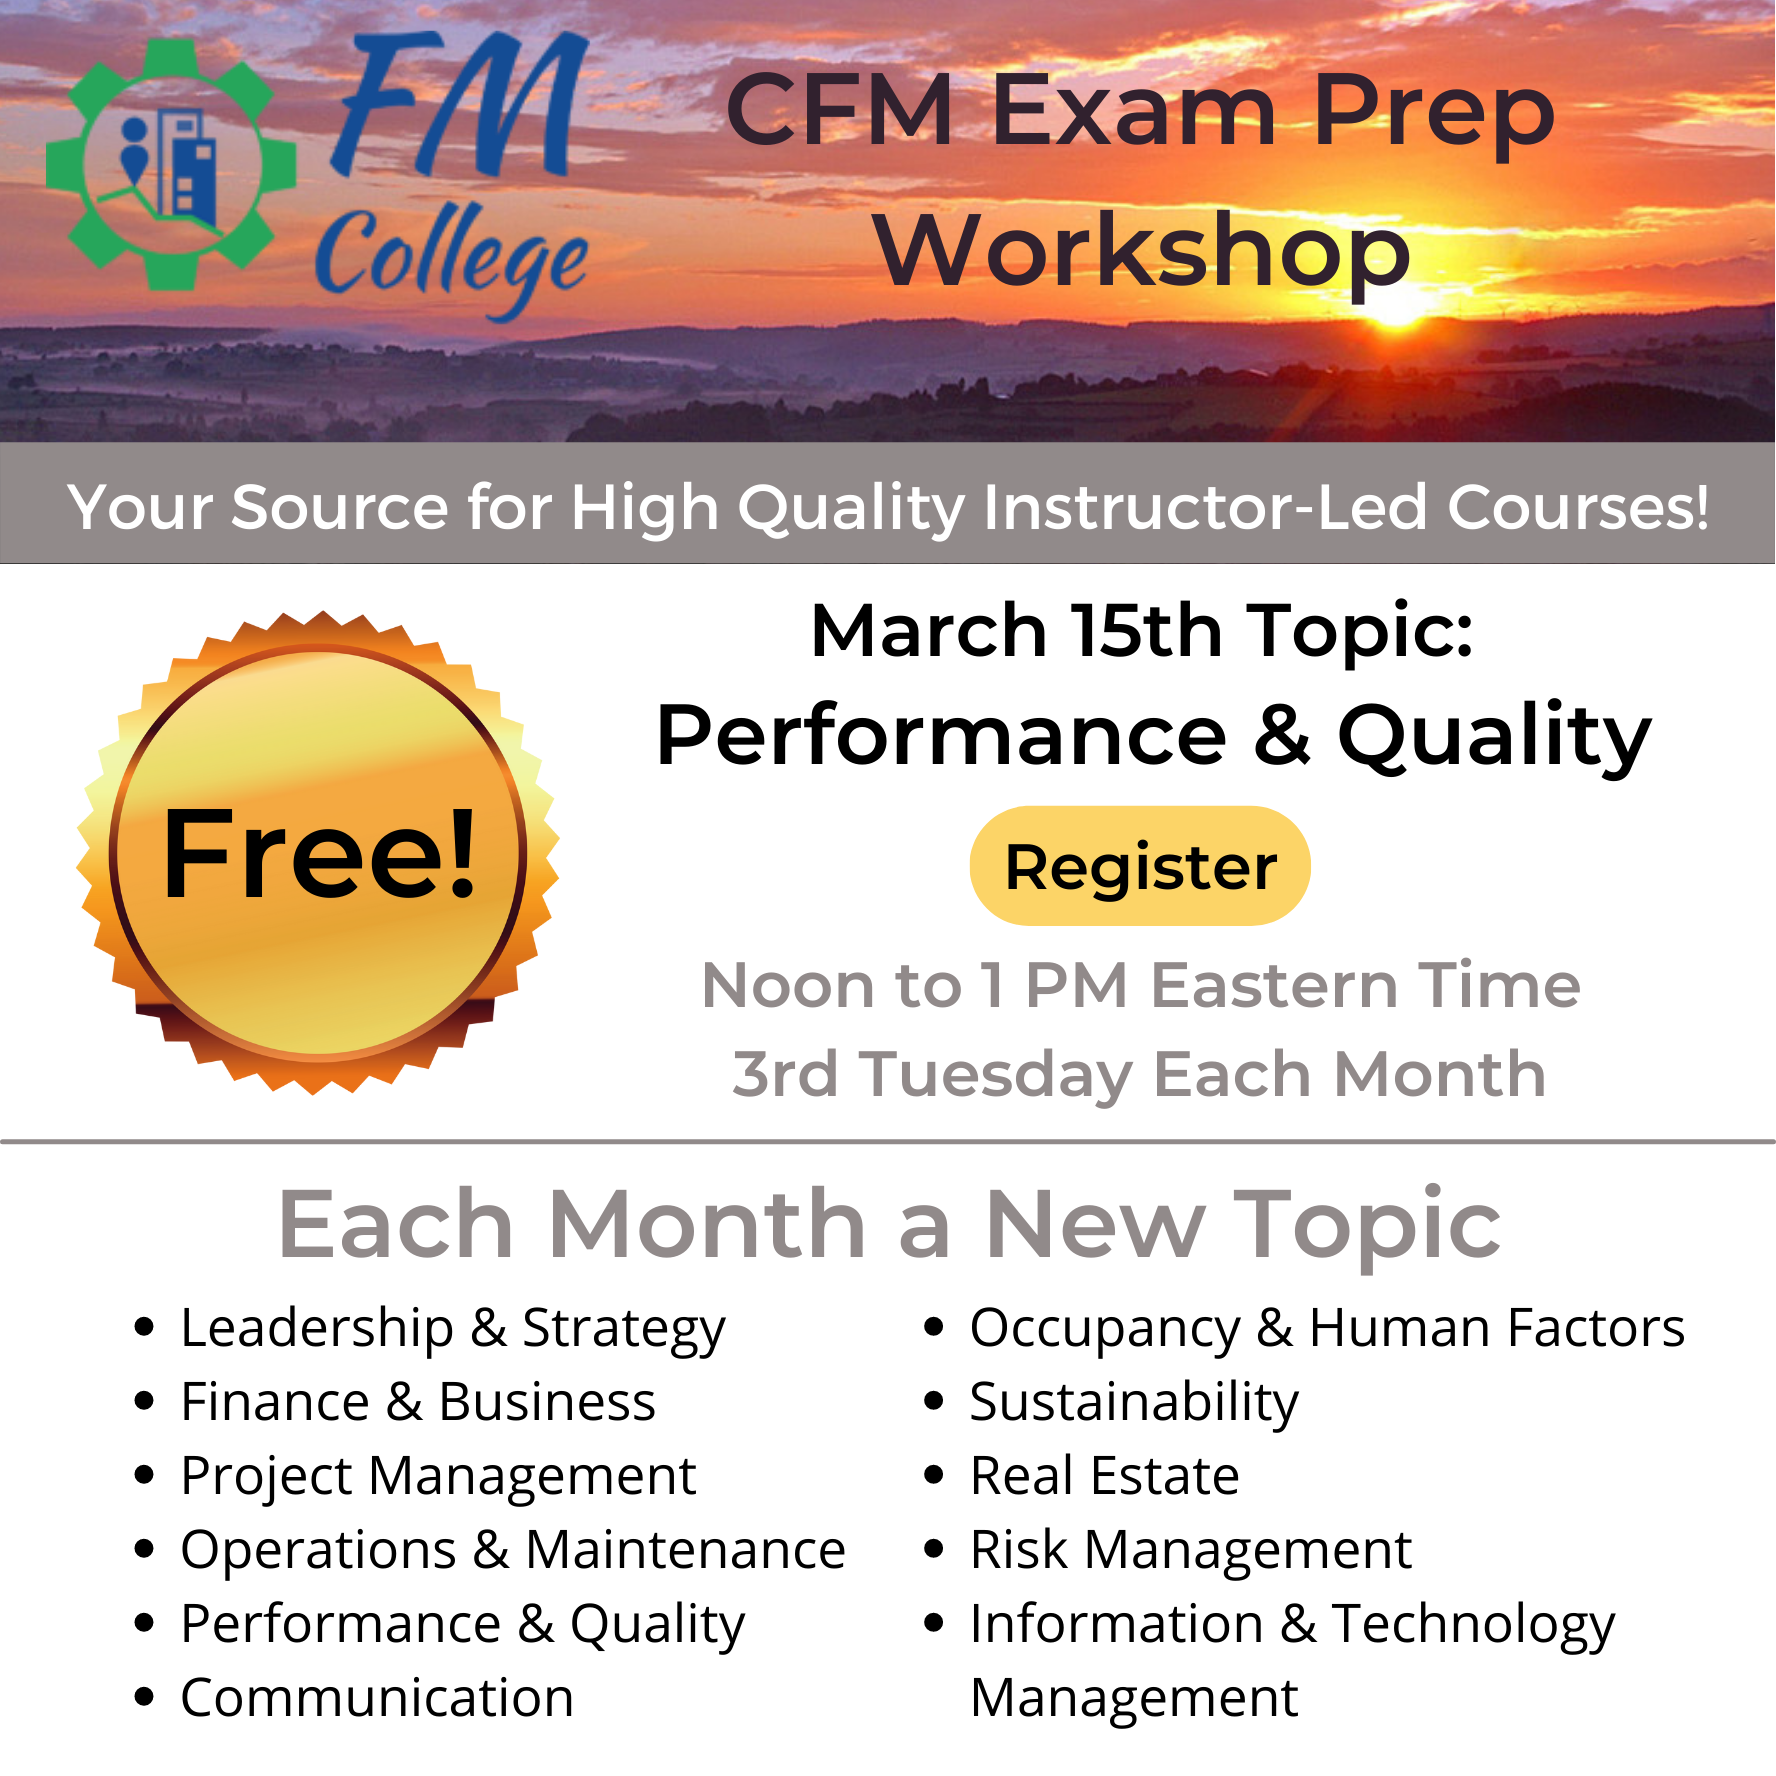 CFM Exam Prep Workshop March